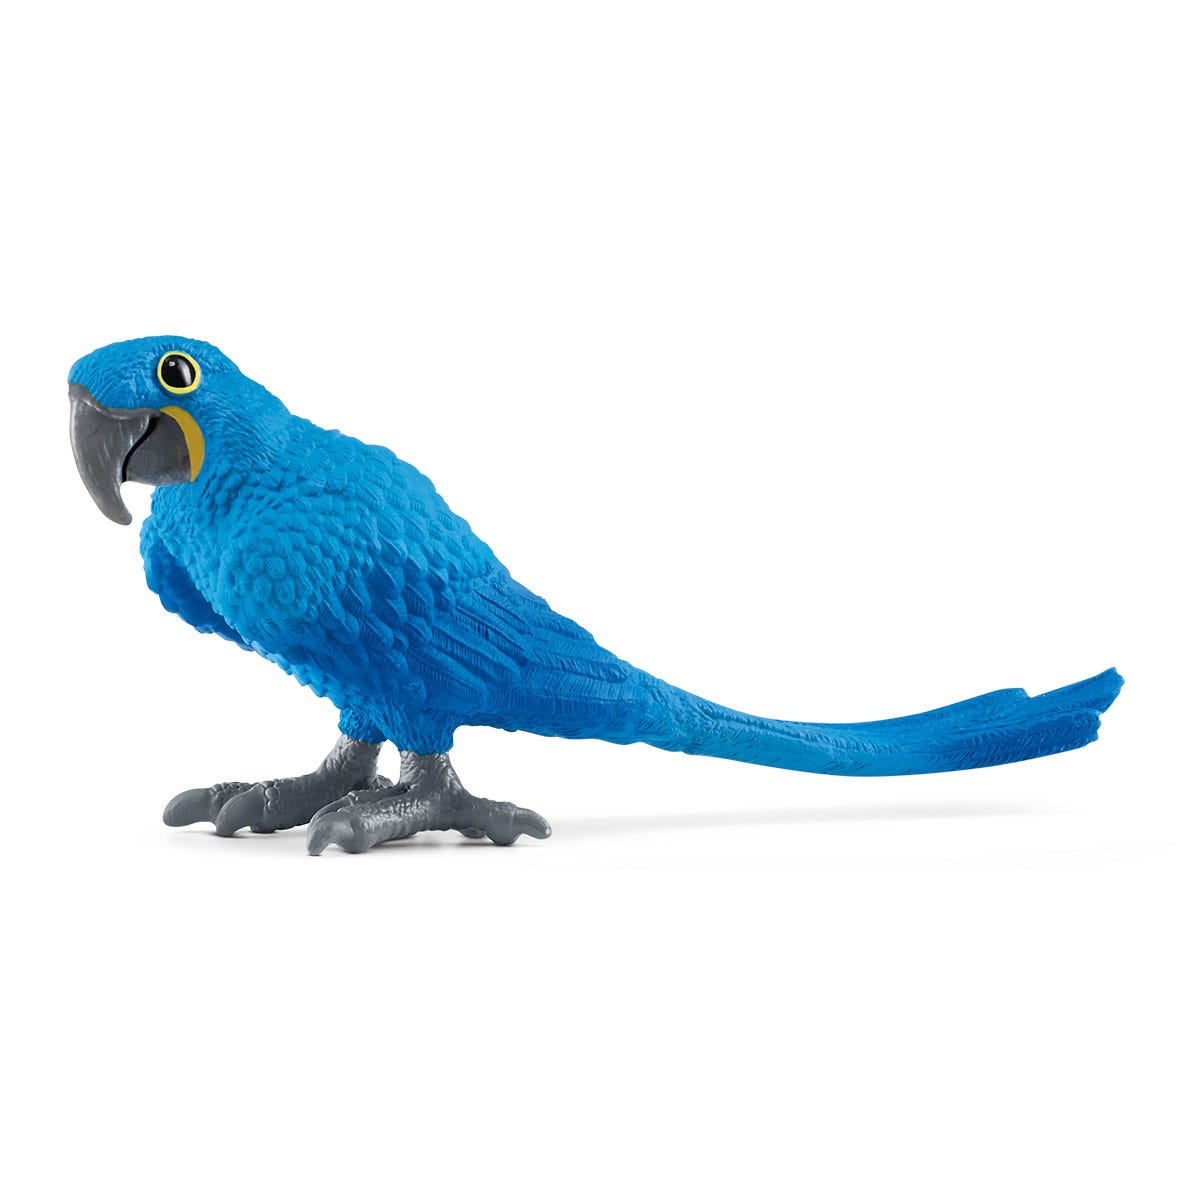 Image of Hyacinth Macaw